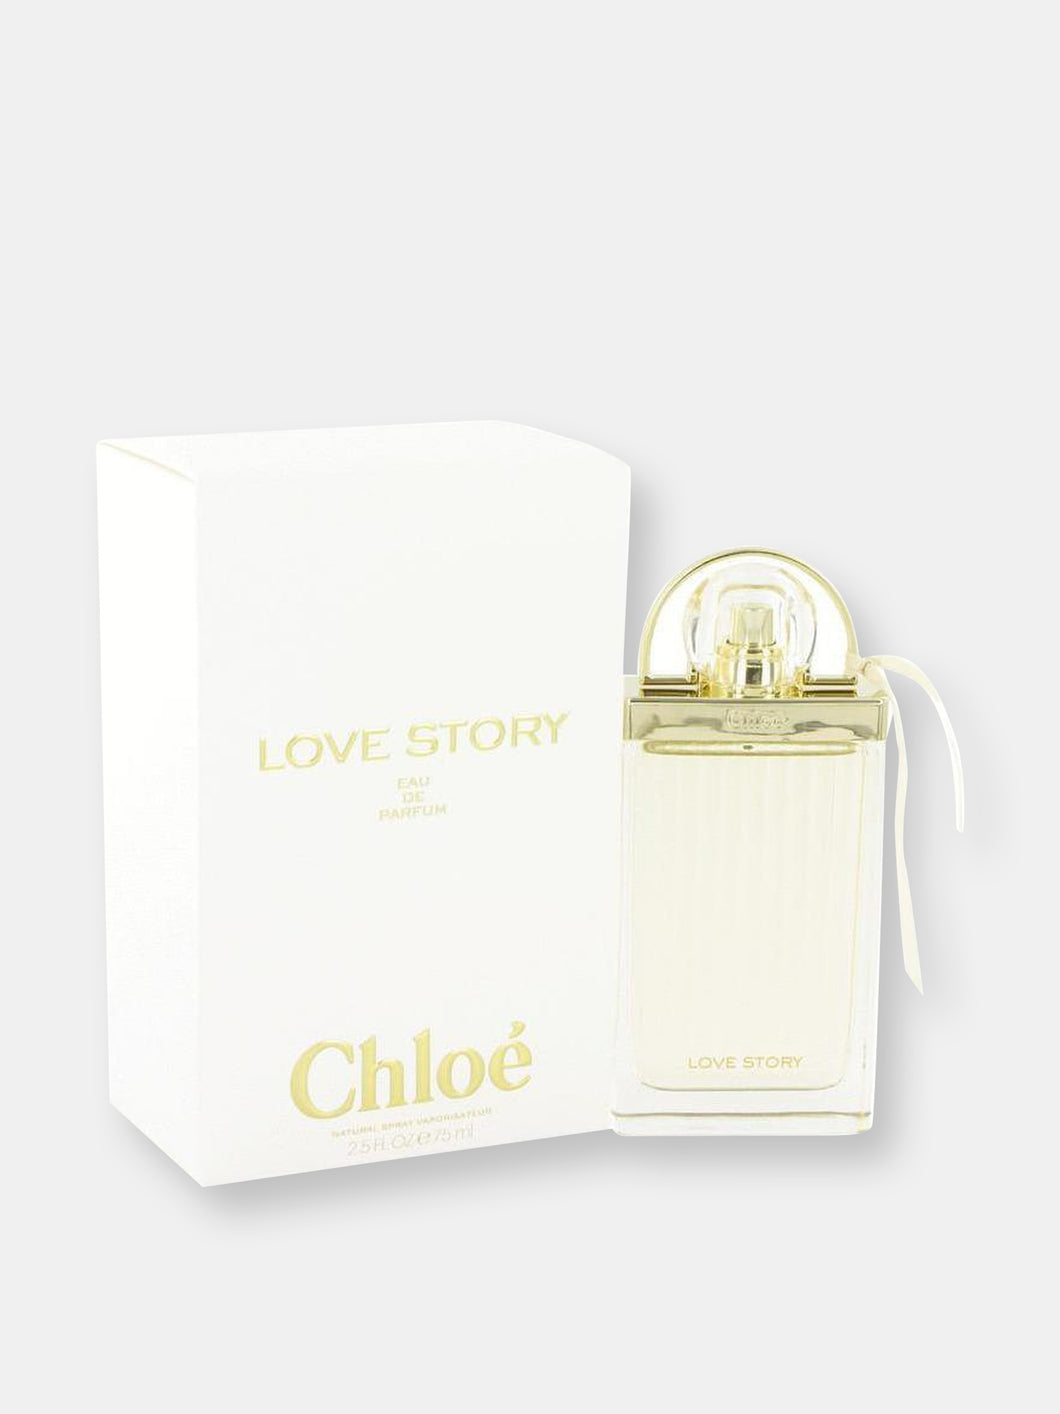 Chloe Love Story by Chloe Eau De Parfum Spray 2.5 oz